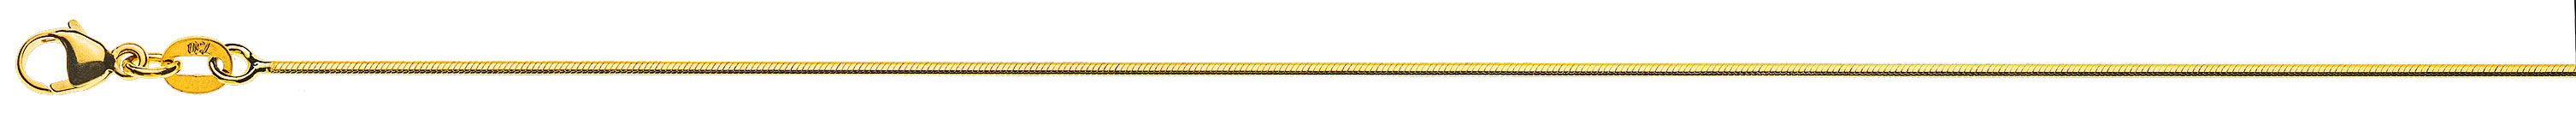 AURONOS Prestige Necklace yellow gold 18K snake chain diamond 38cm 1.0mm